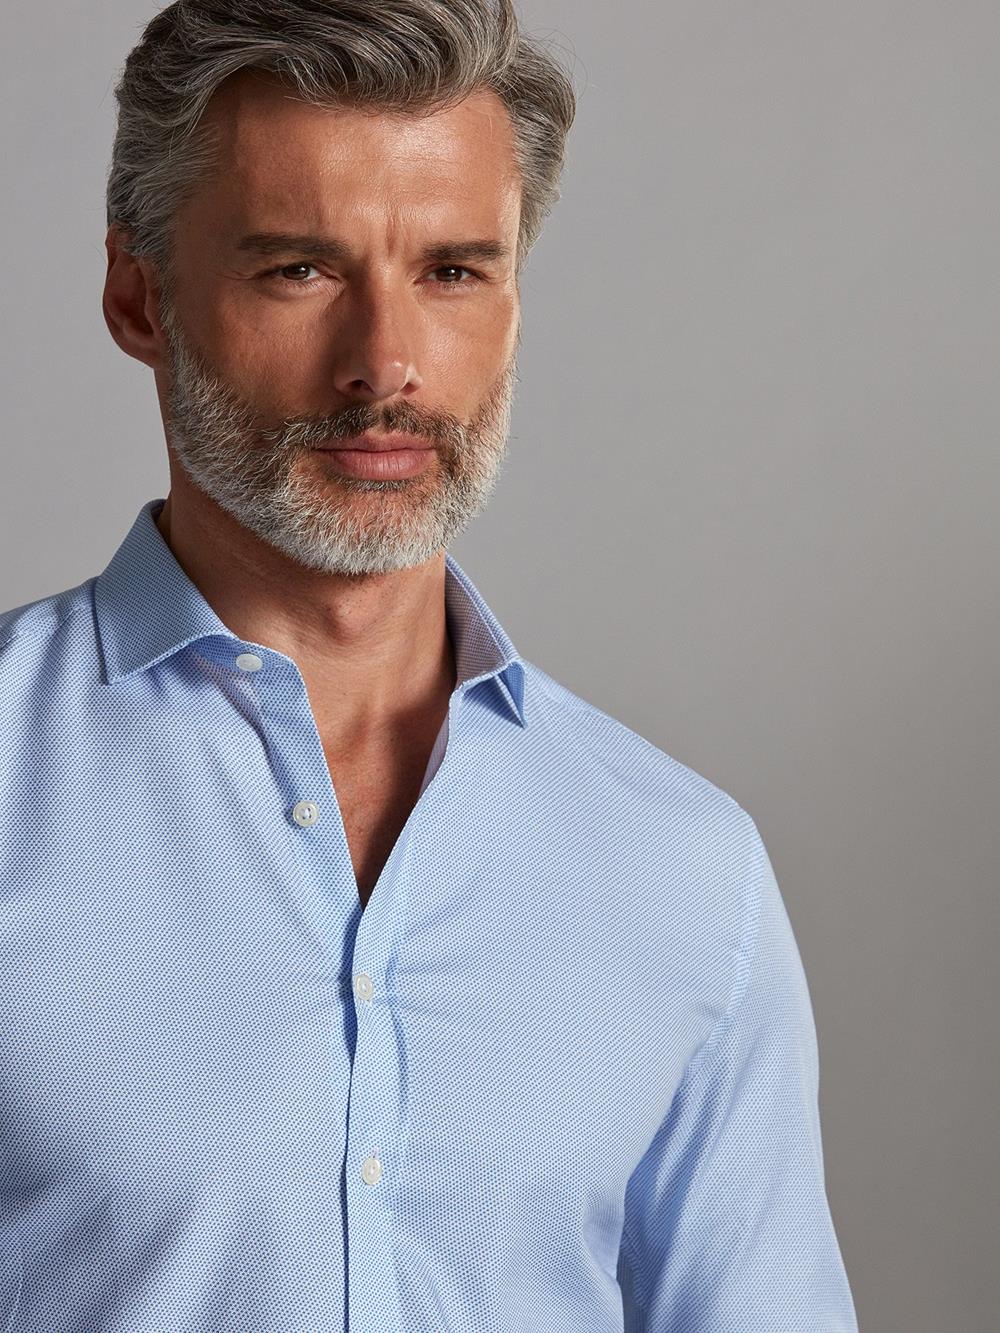 Finn slim fit shirt with sky blue print pattern - Small collar